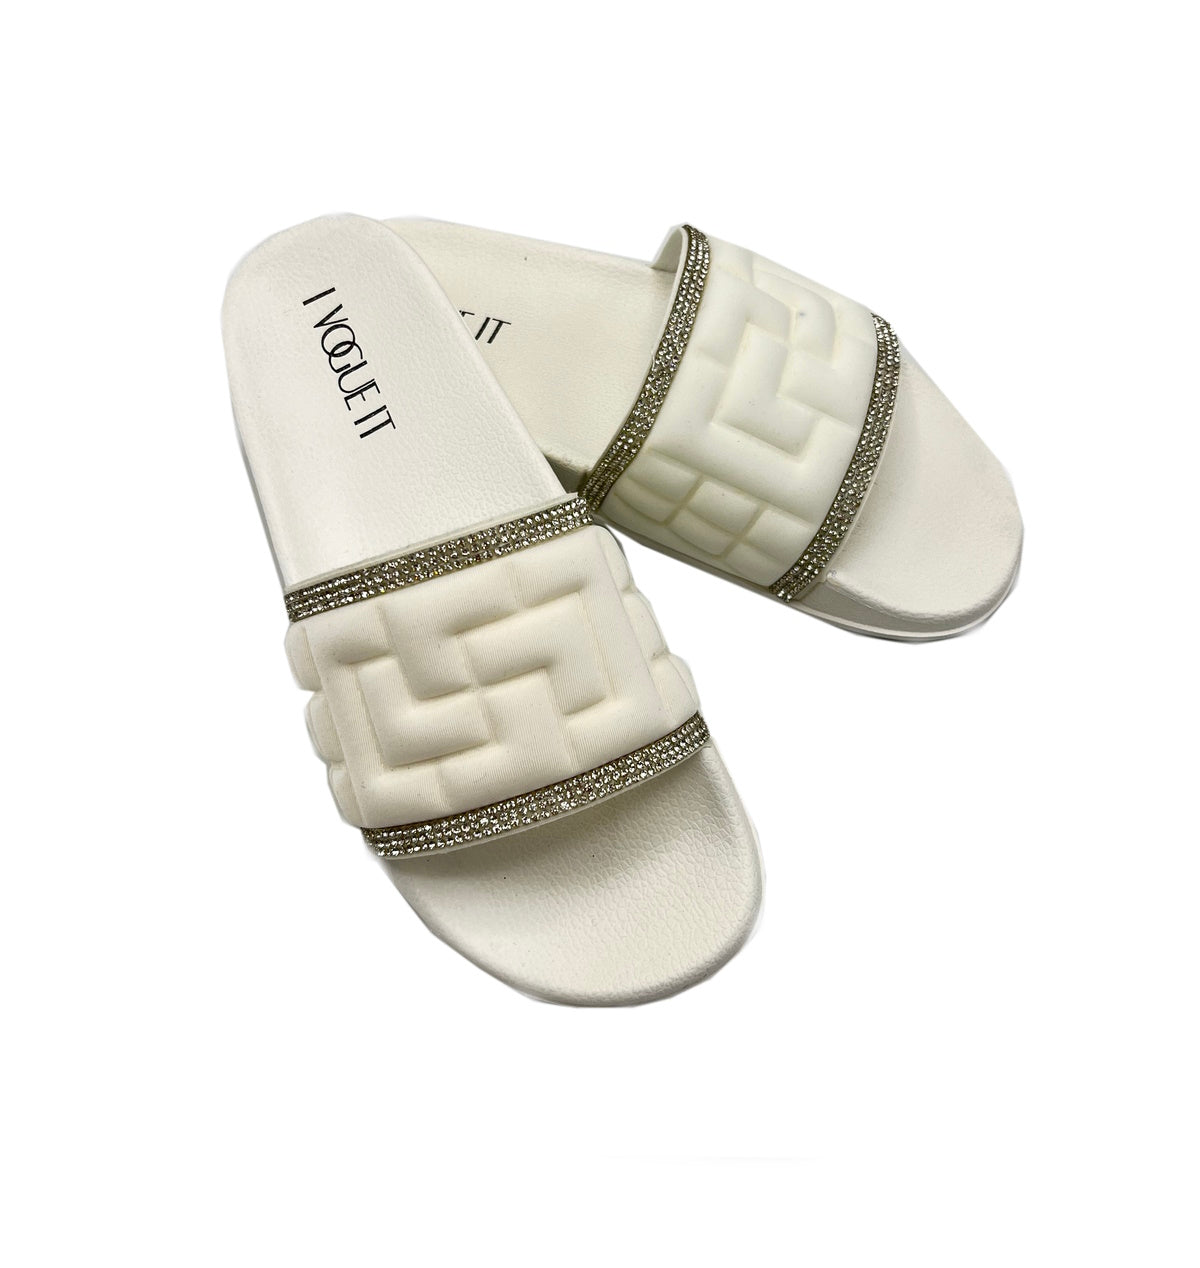 Sandals, brand I Vogue It, art. 90163.364